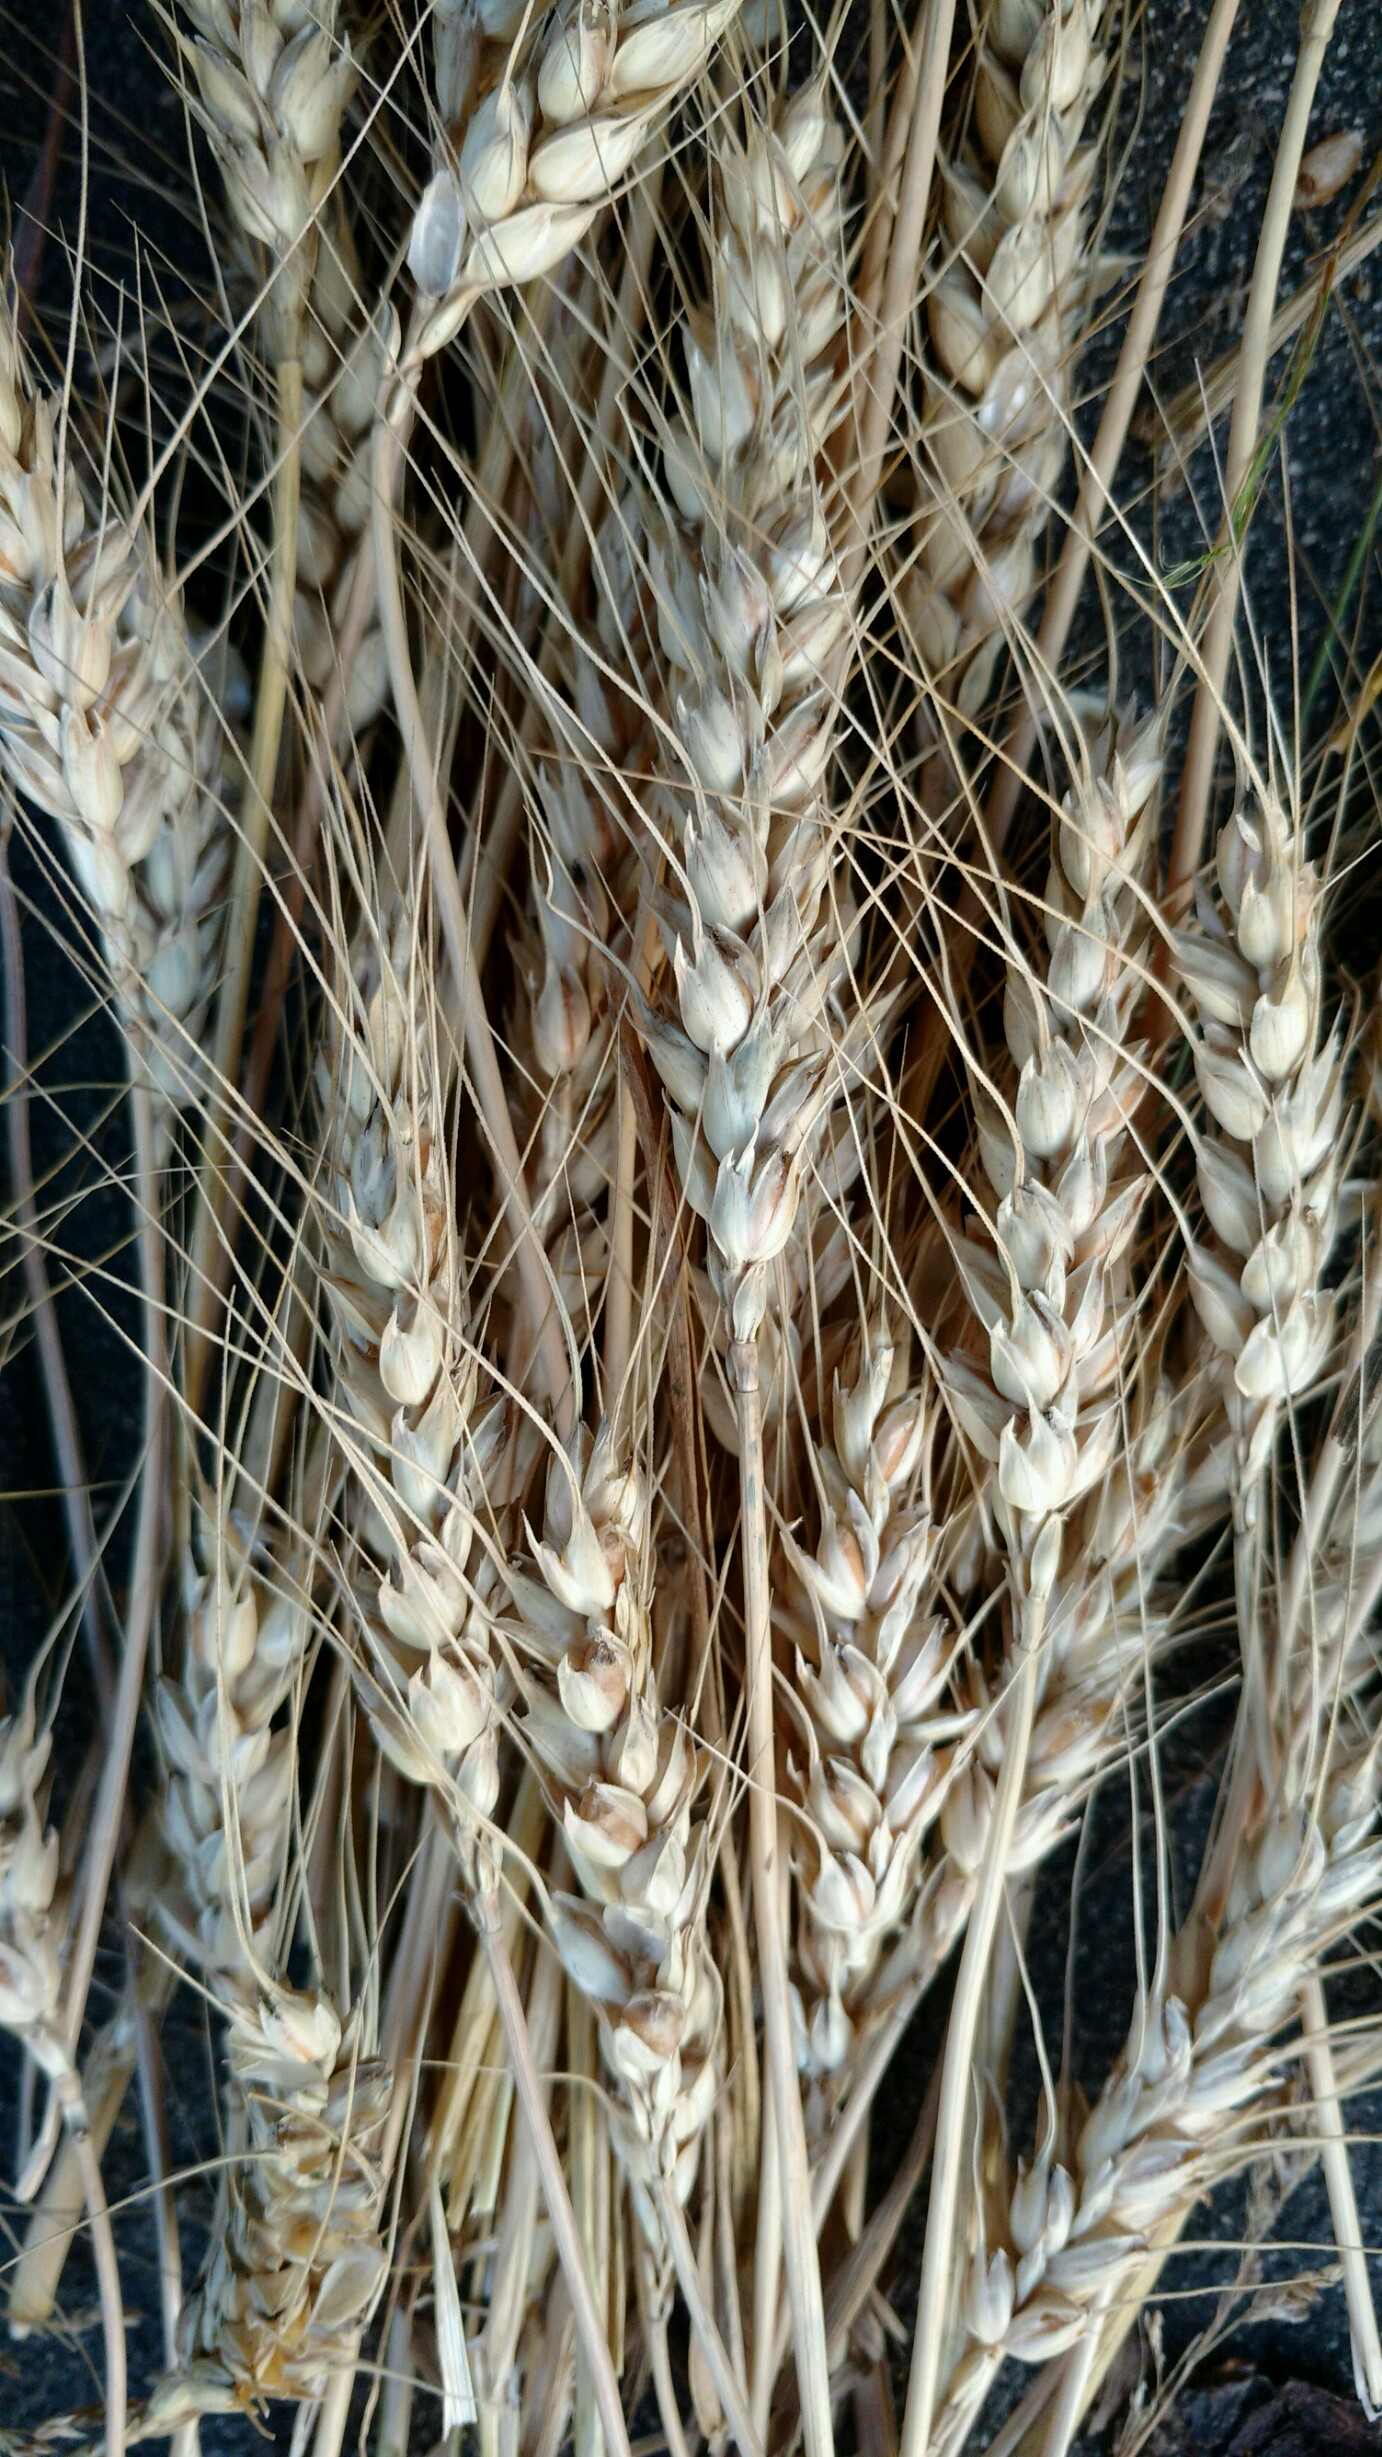 wheat stalks